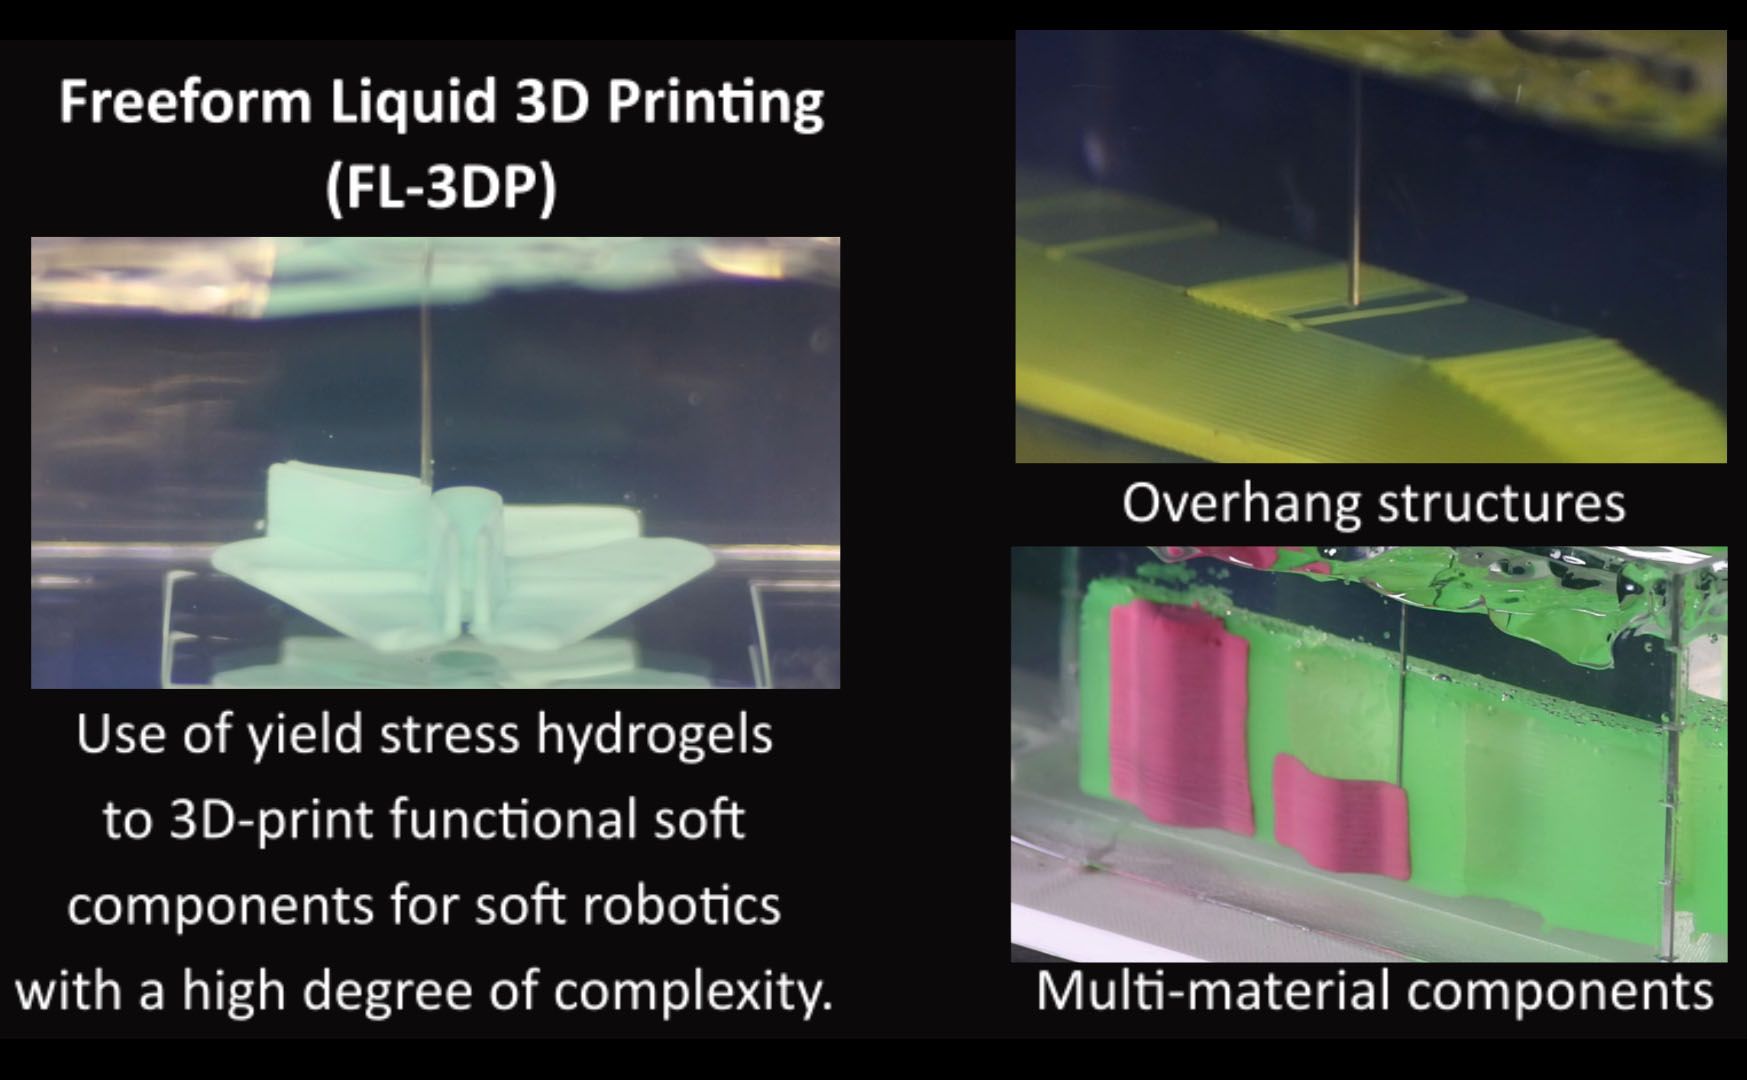 Freeform liquid 3D printing